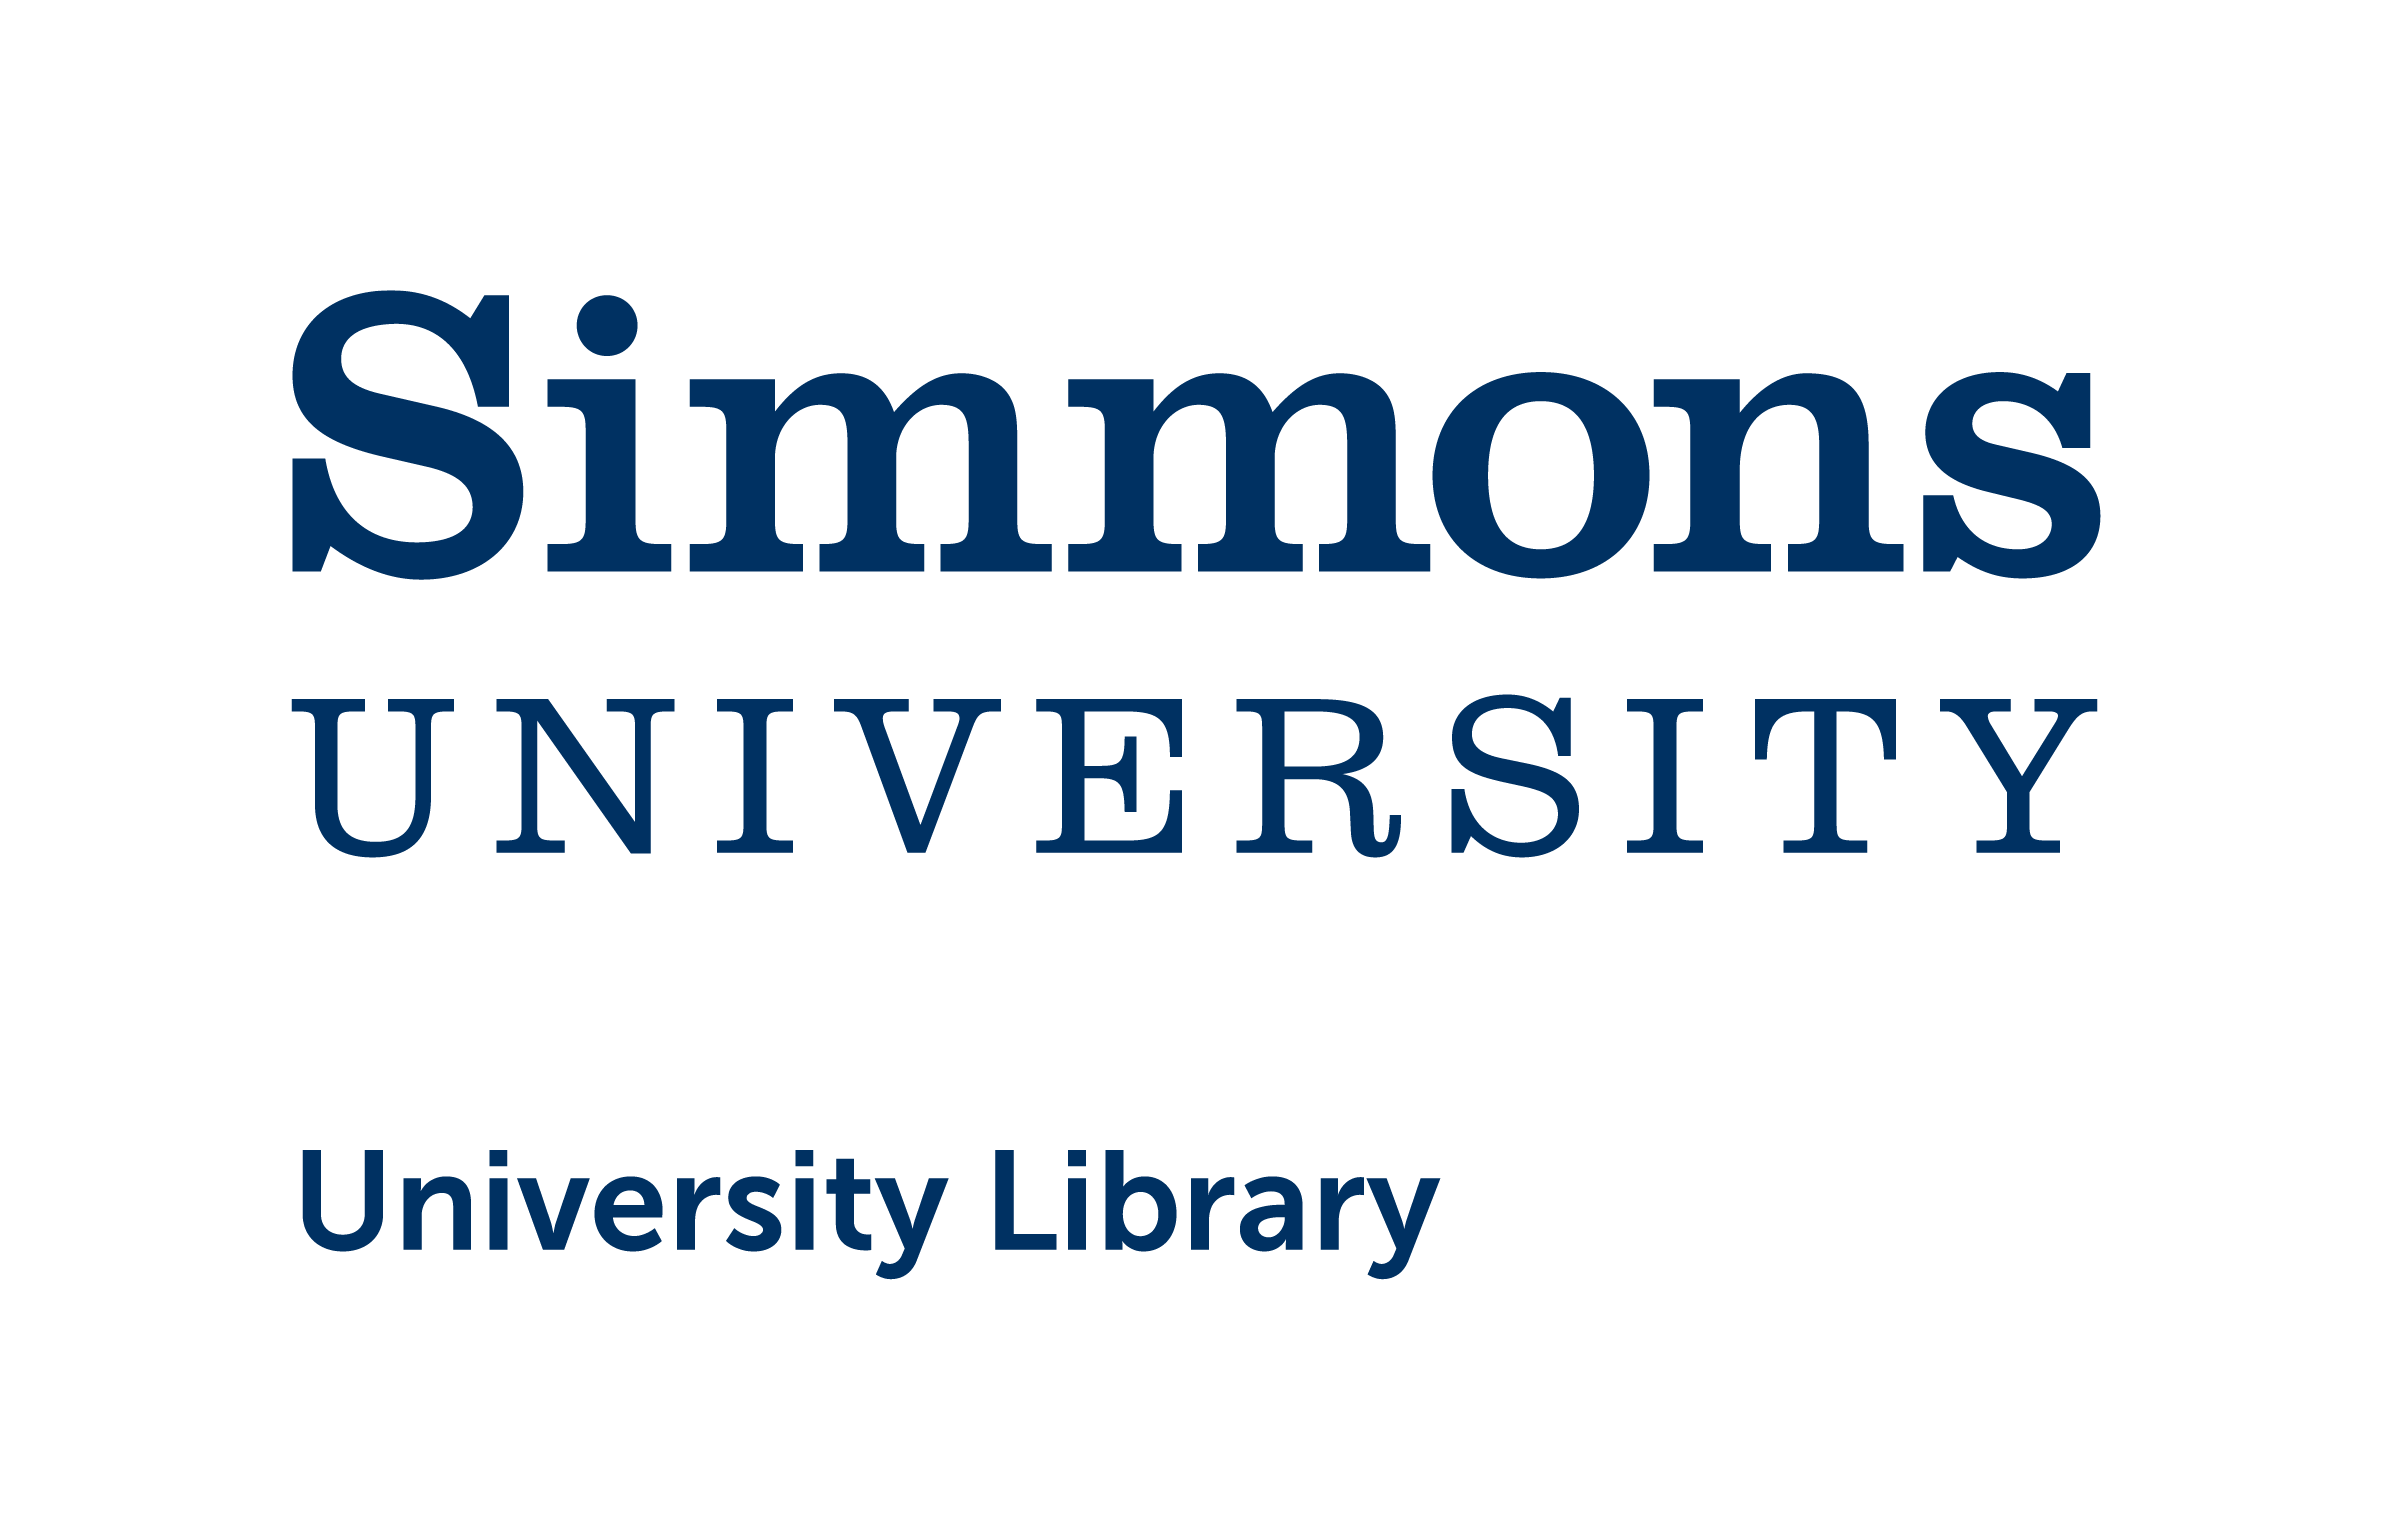 Simmons University Library